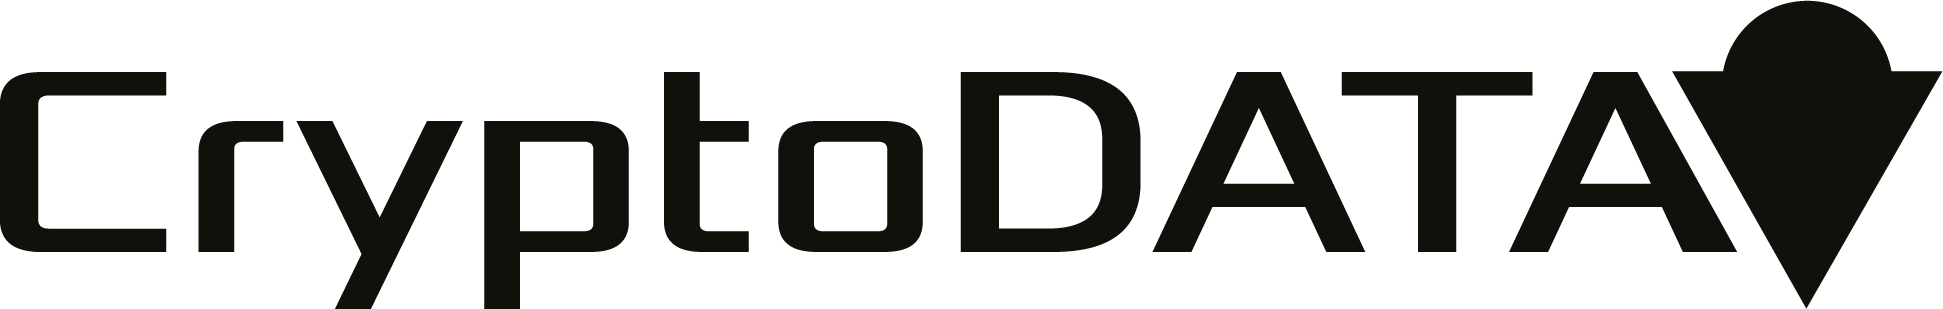 cryptodata logo-01 (1).png